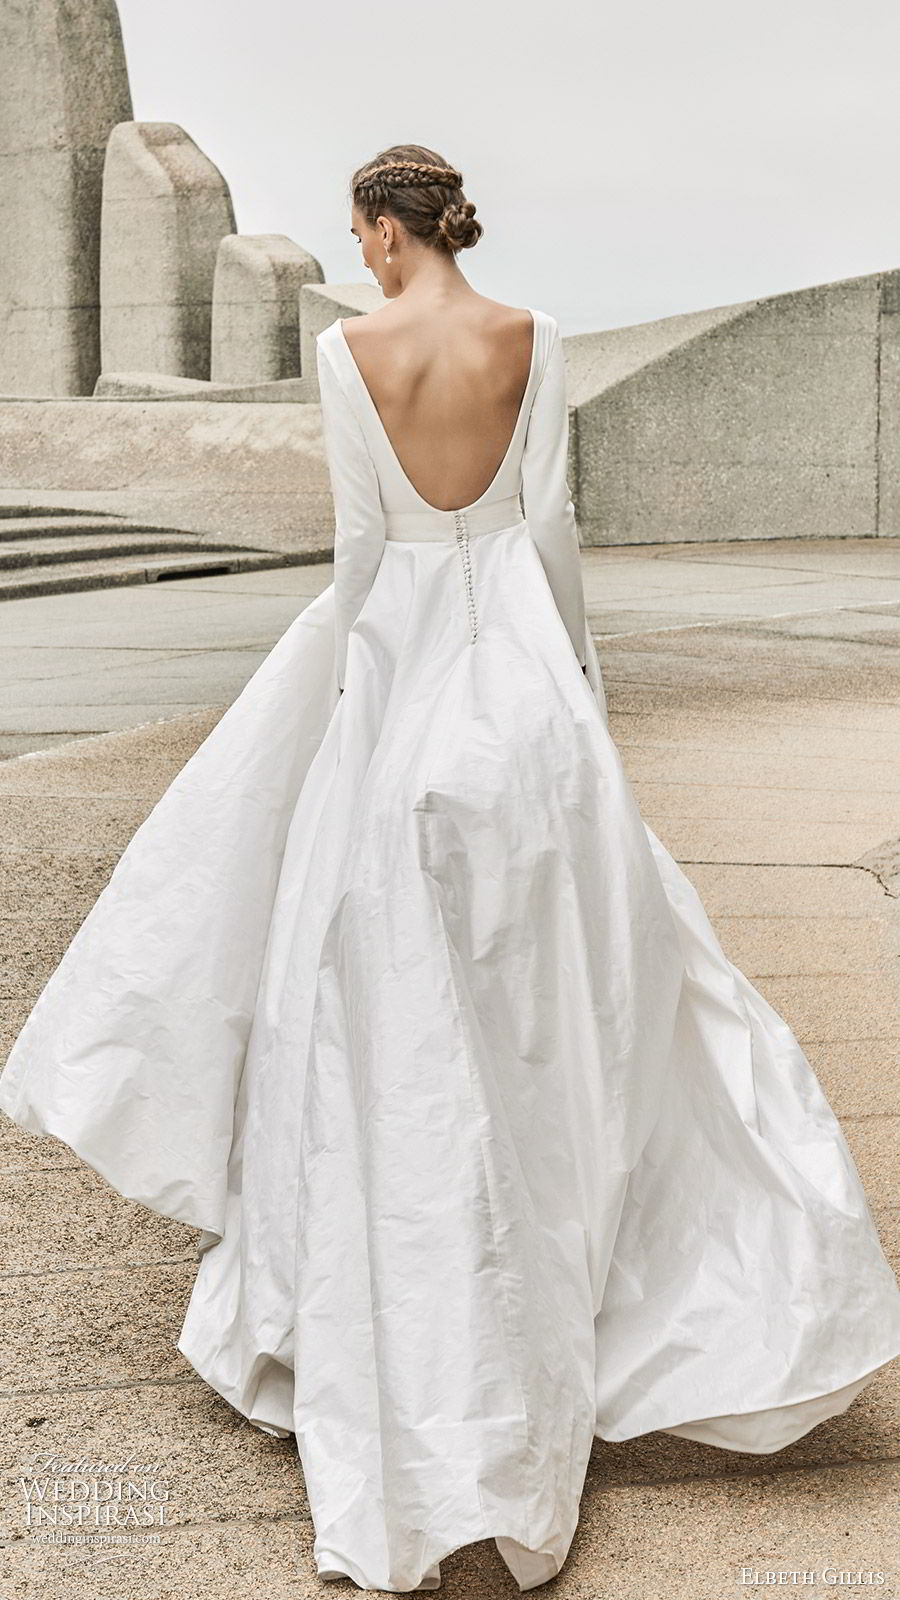 elbeth gillis 2020 bridal long sleeves bateau neckline minimally embellished a line ball gown wedding dress (2) clean chic minimal modest sweep train scoop back pockets bv